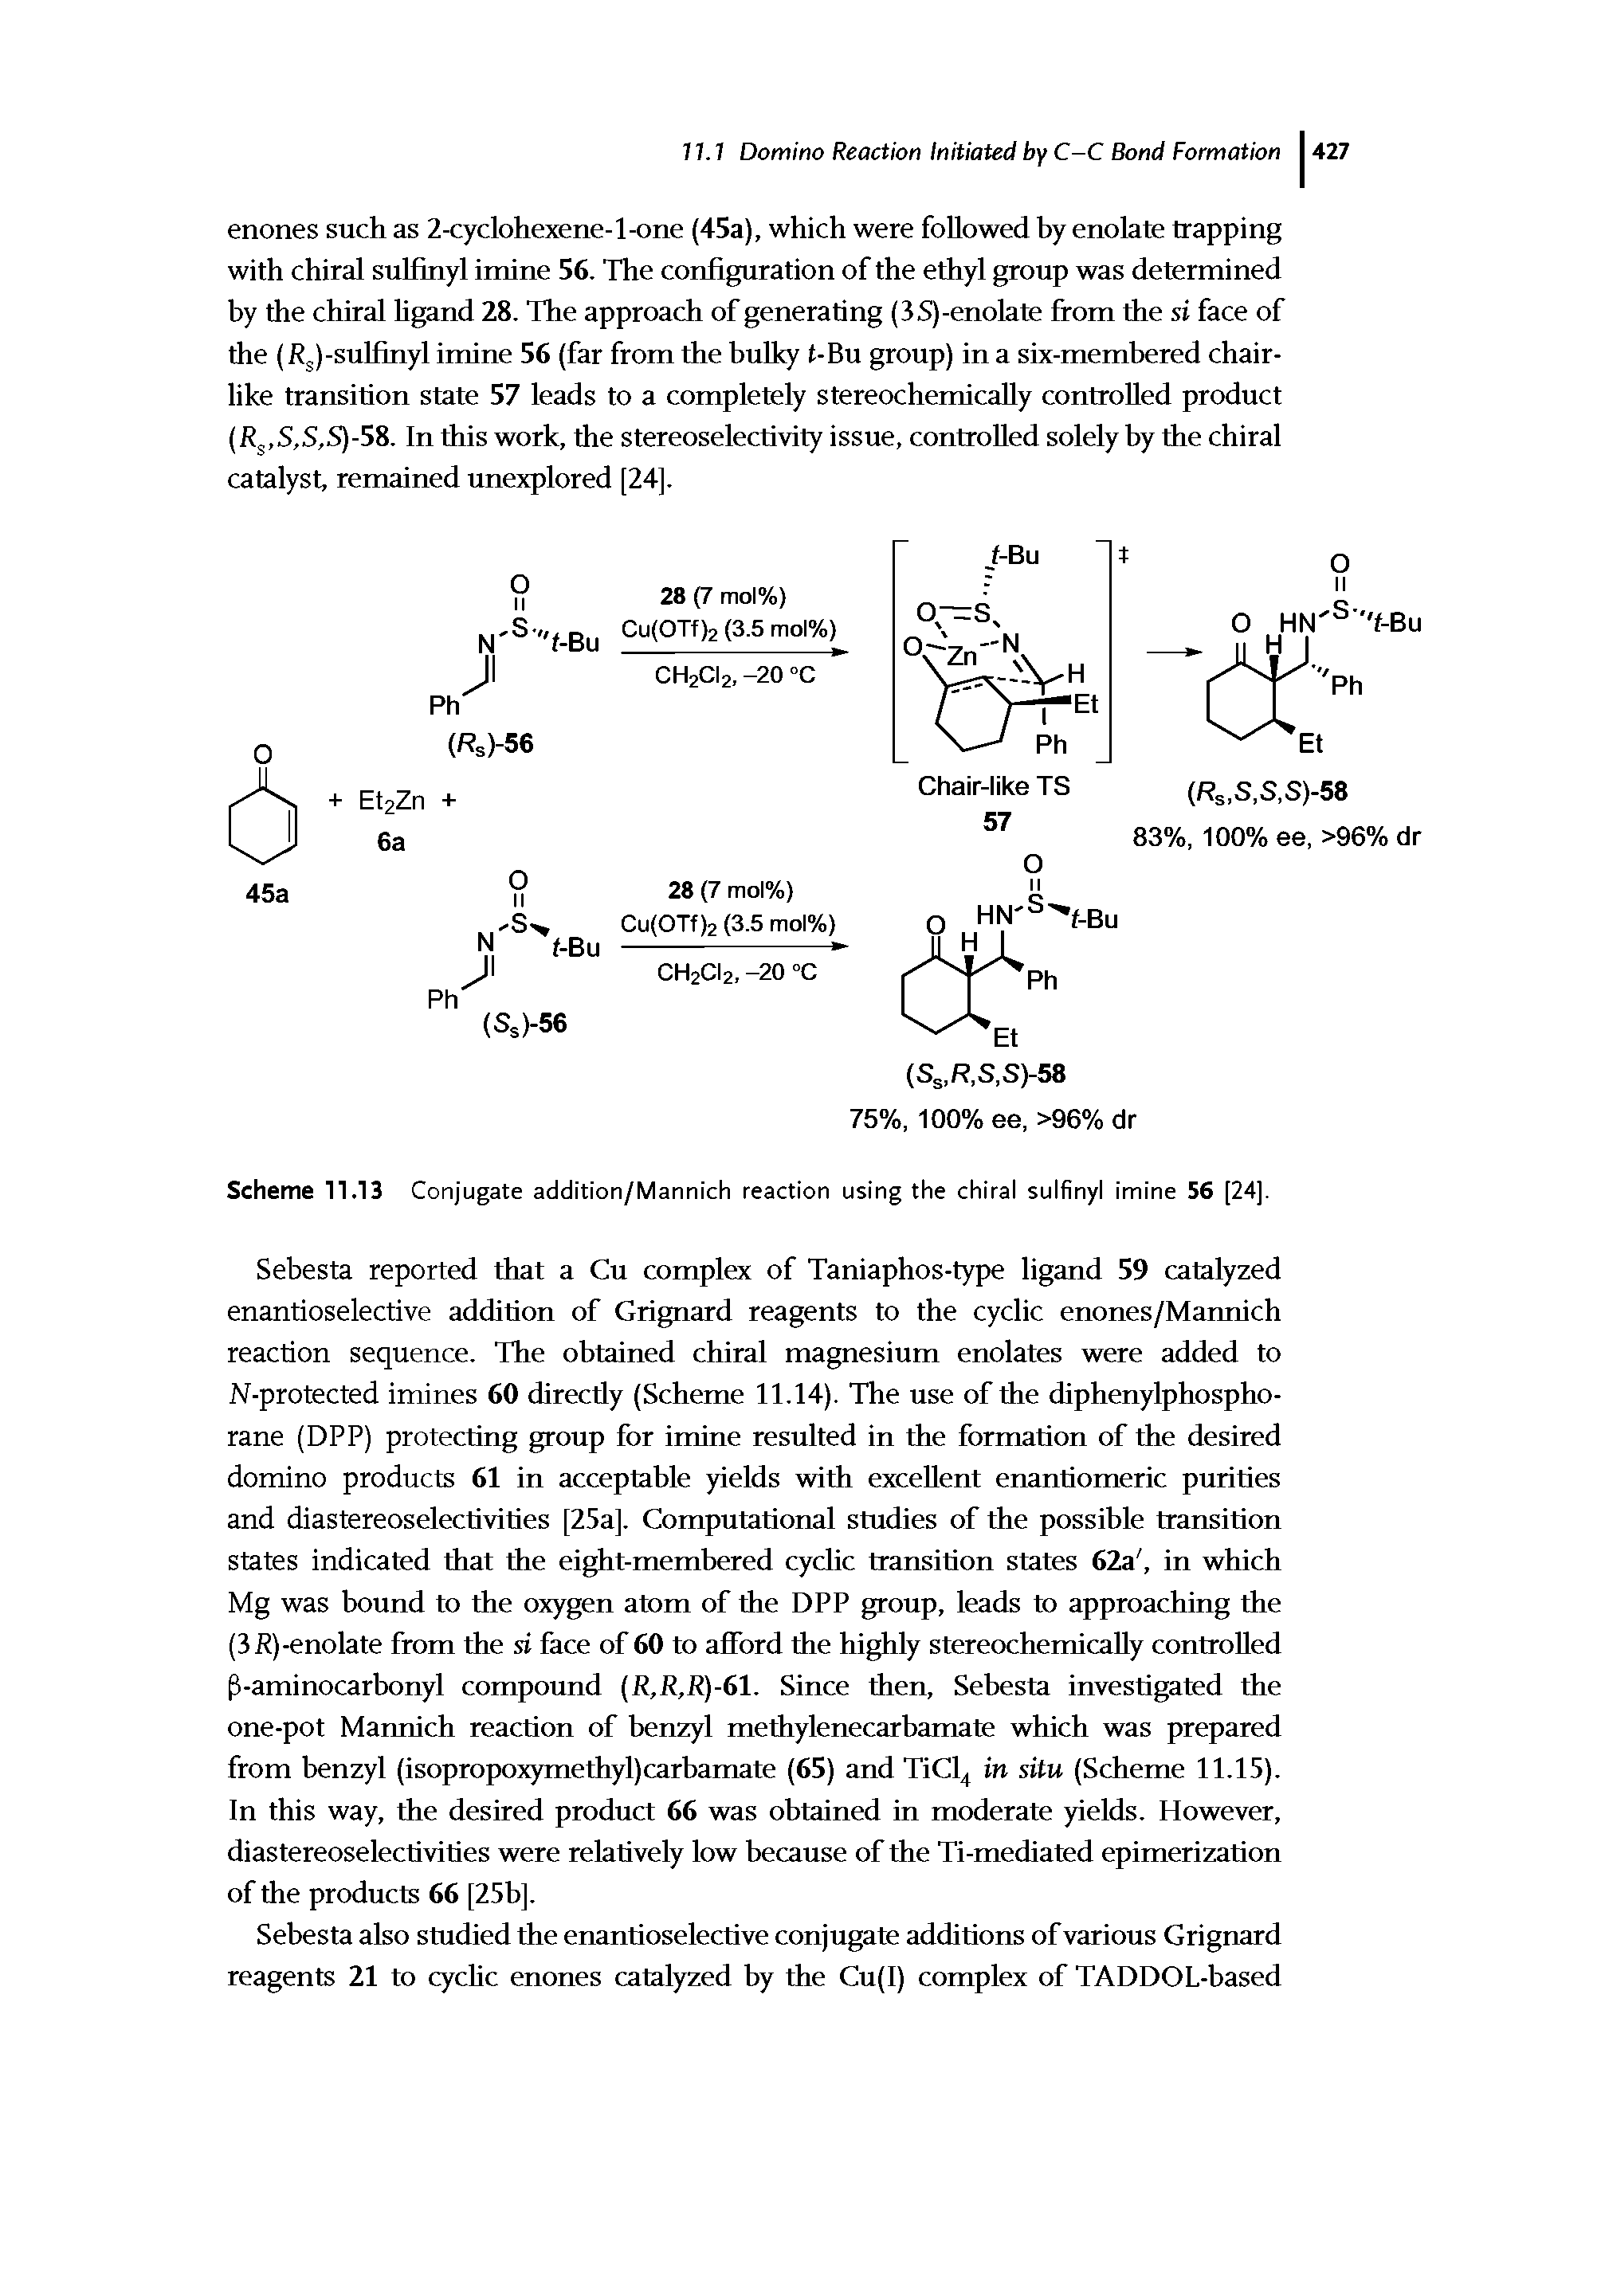 Scheme 11.13 Conjugate addition/Mannich reaction using the chiral sulfinyl imine 56 [24].